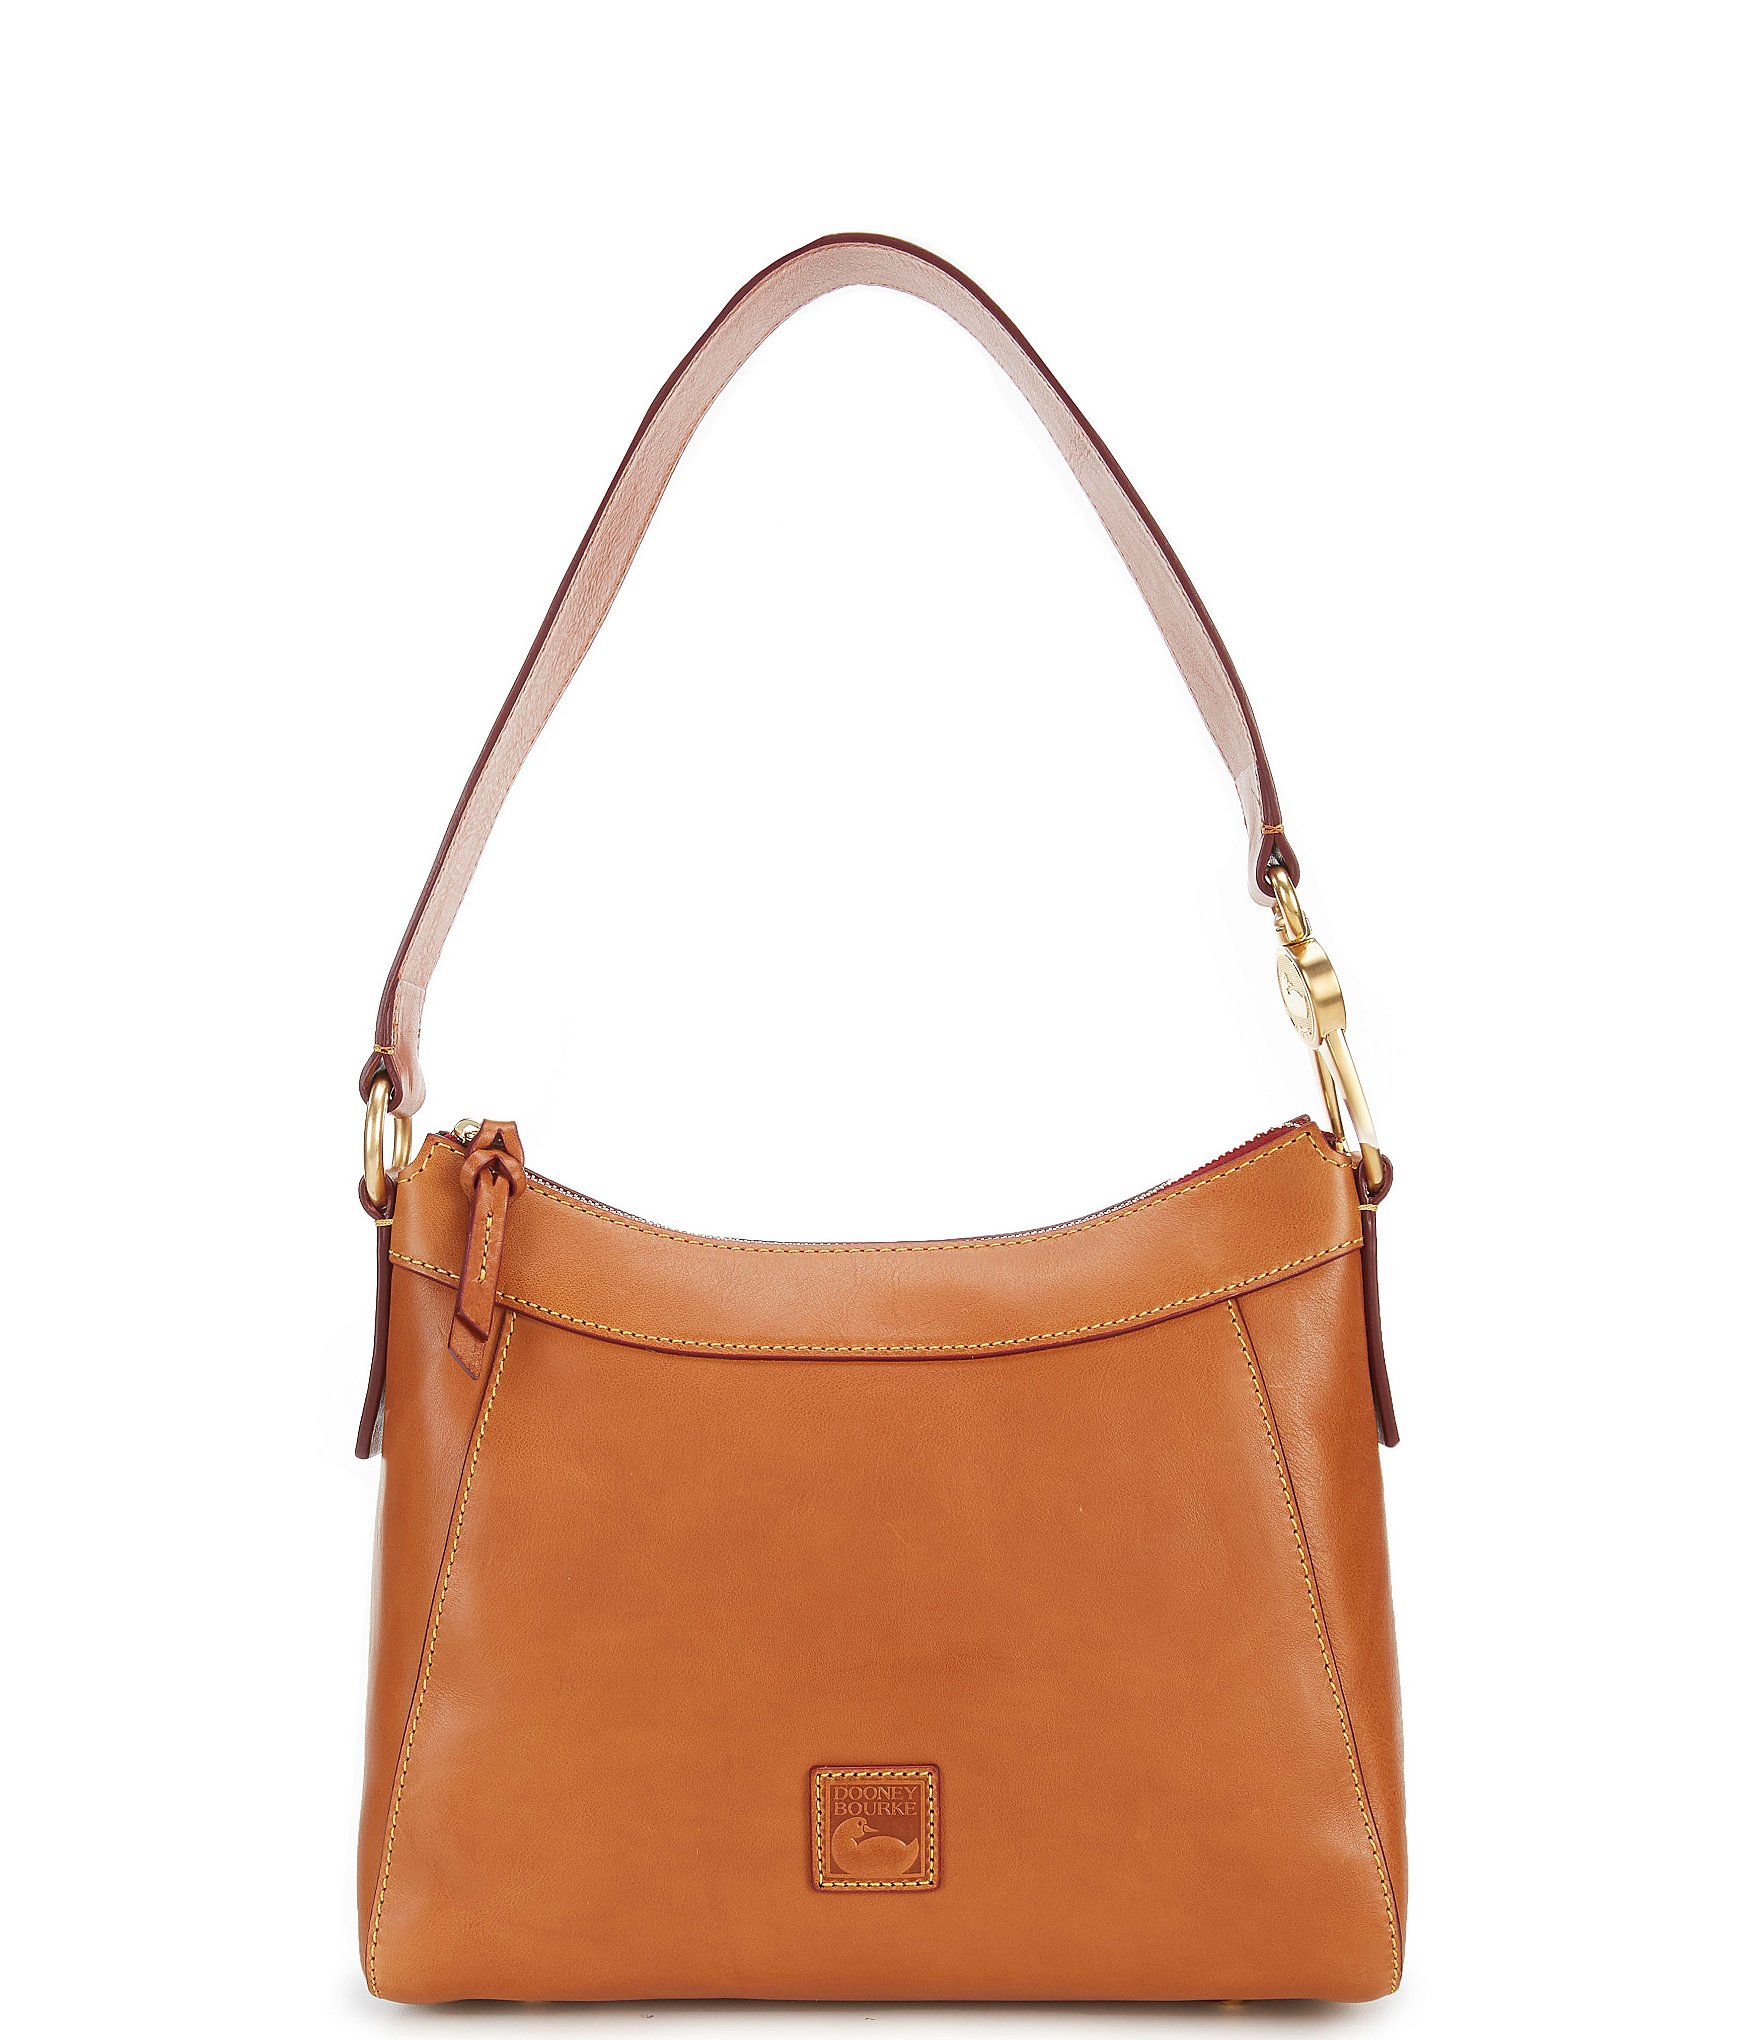 Dooney & Bourke Saffiano Sophie  Taupe bag, Dooney, Leather hobo bag